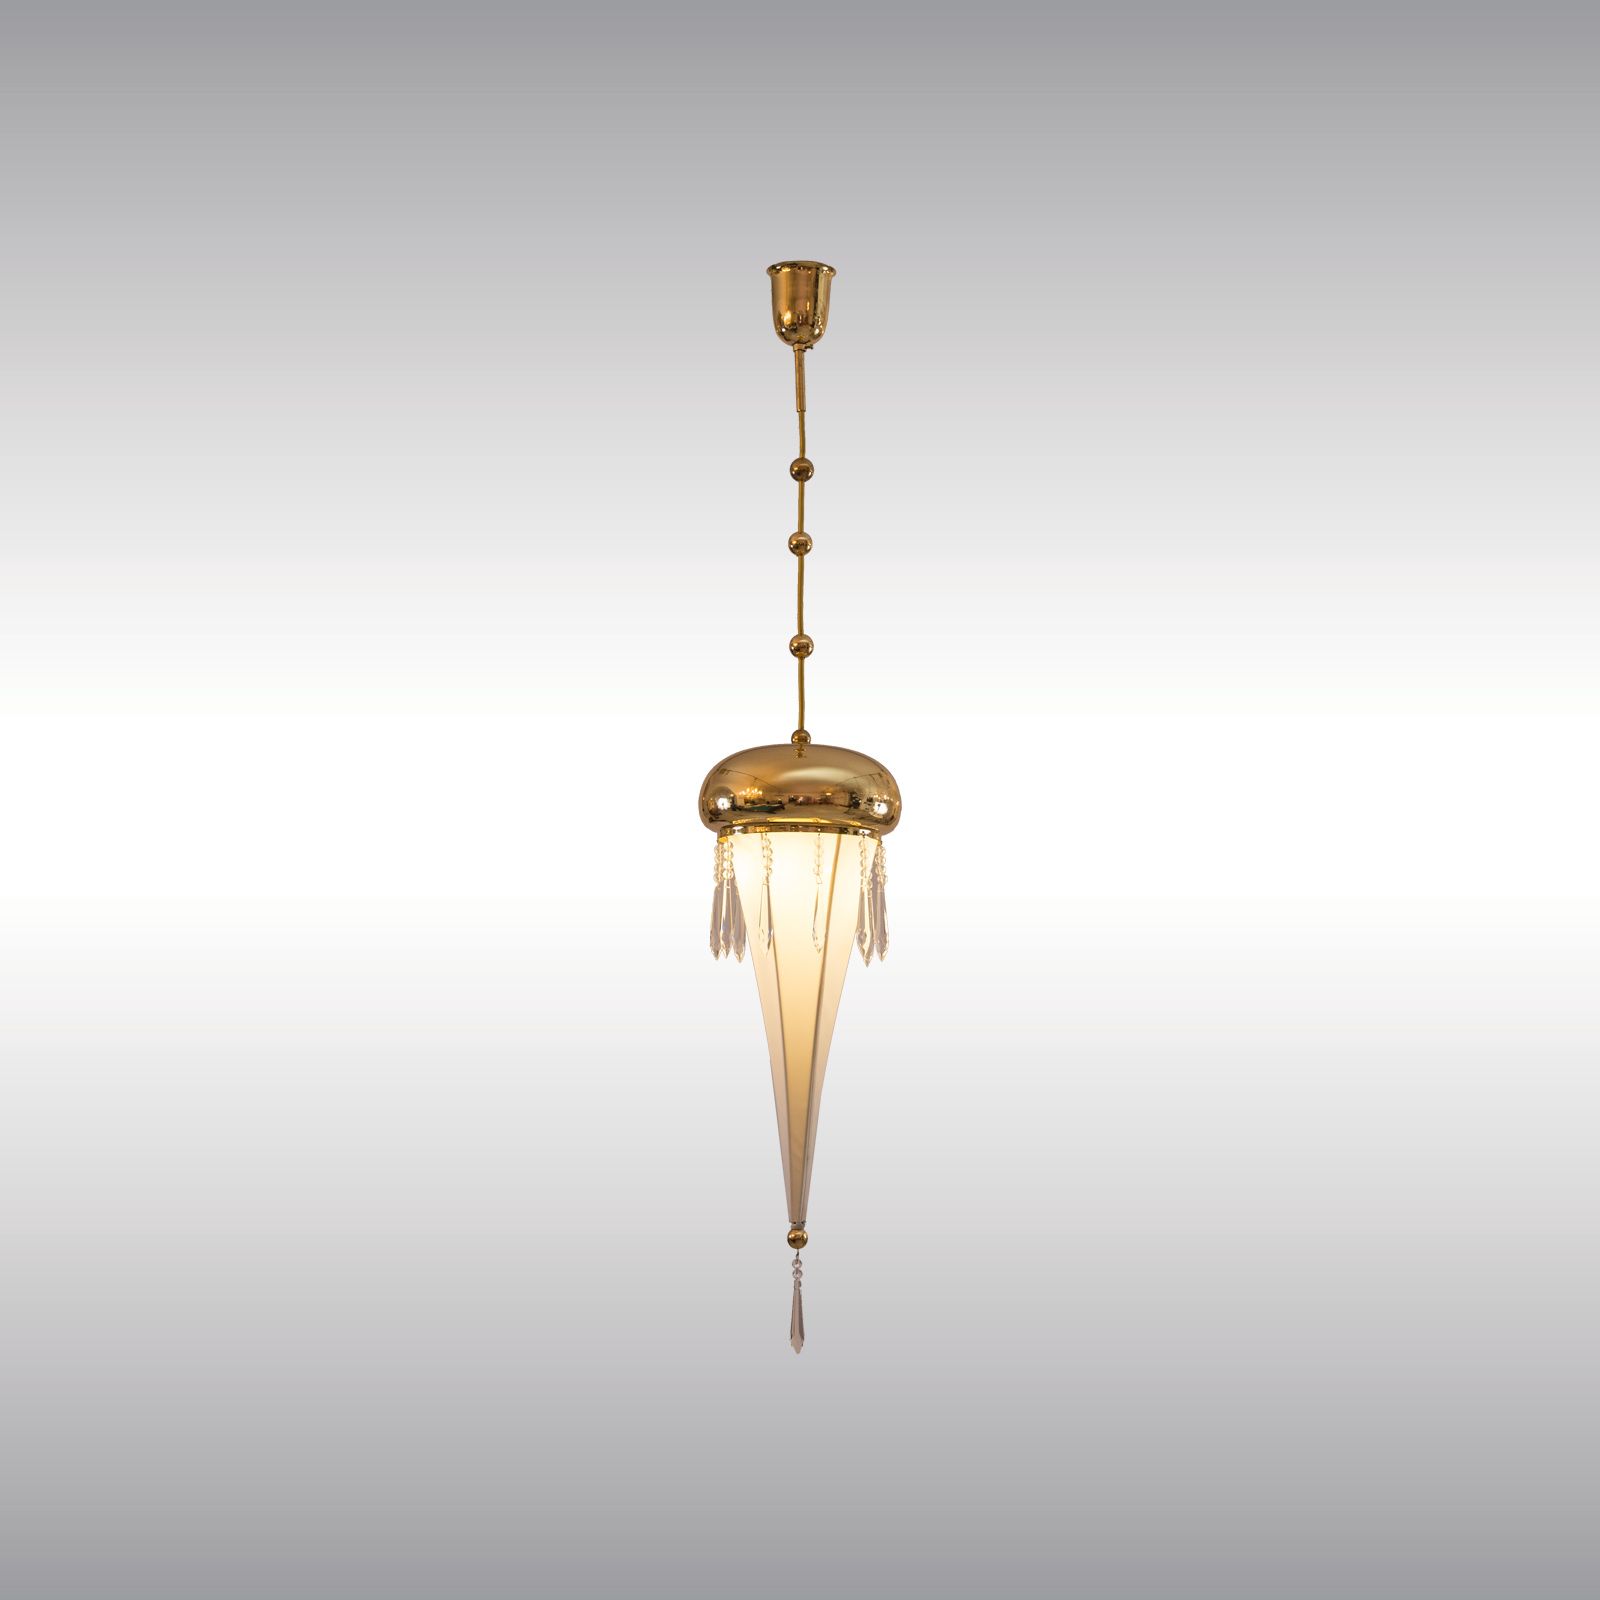 WOKA LAMPS VIENNA - OrderNr.: 21302|Fifth-Avenue - Design: Josef Hoffmann